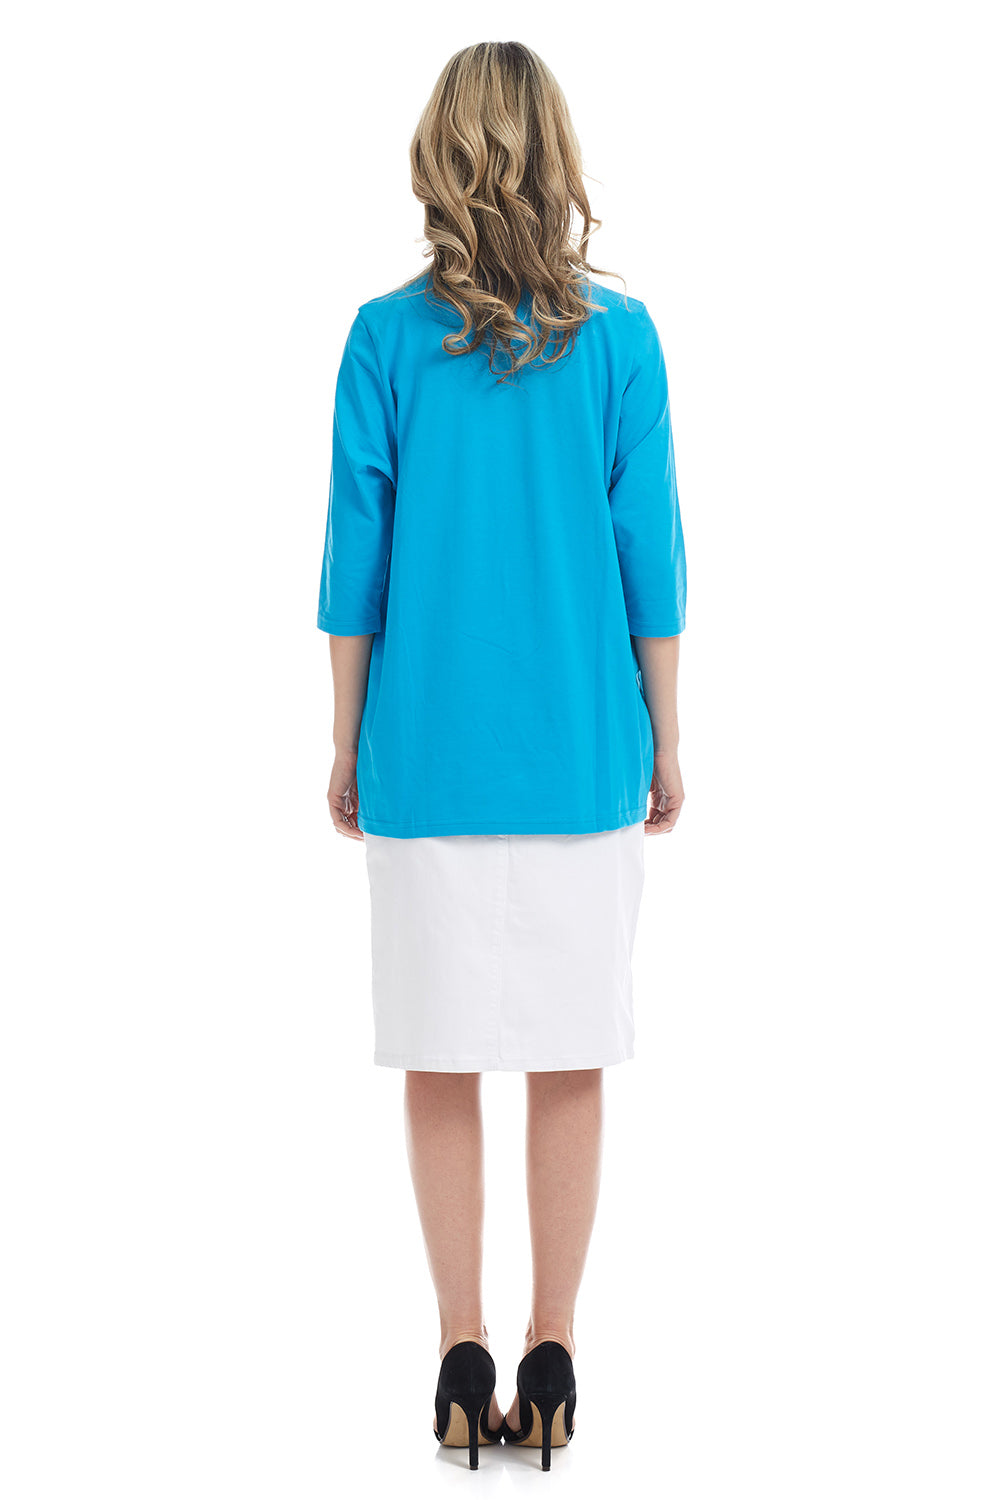 Basic 3/4 sleeve cotton oversized top for women